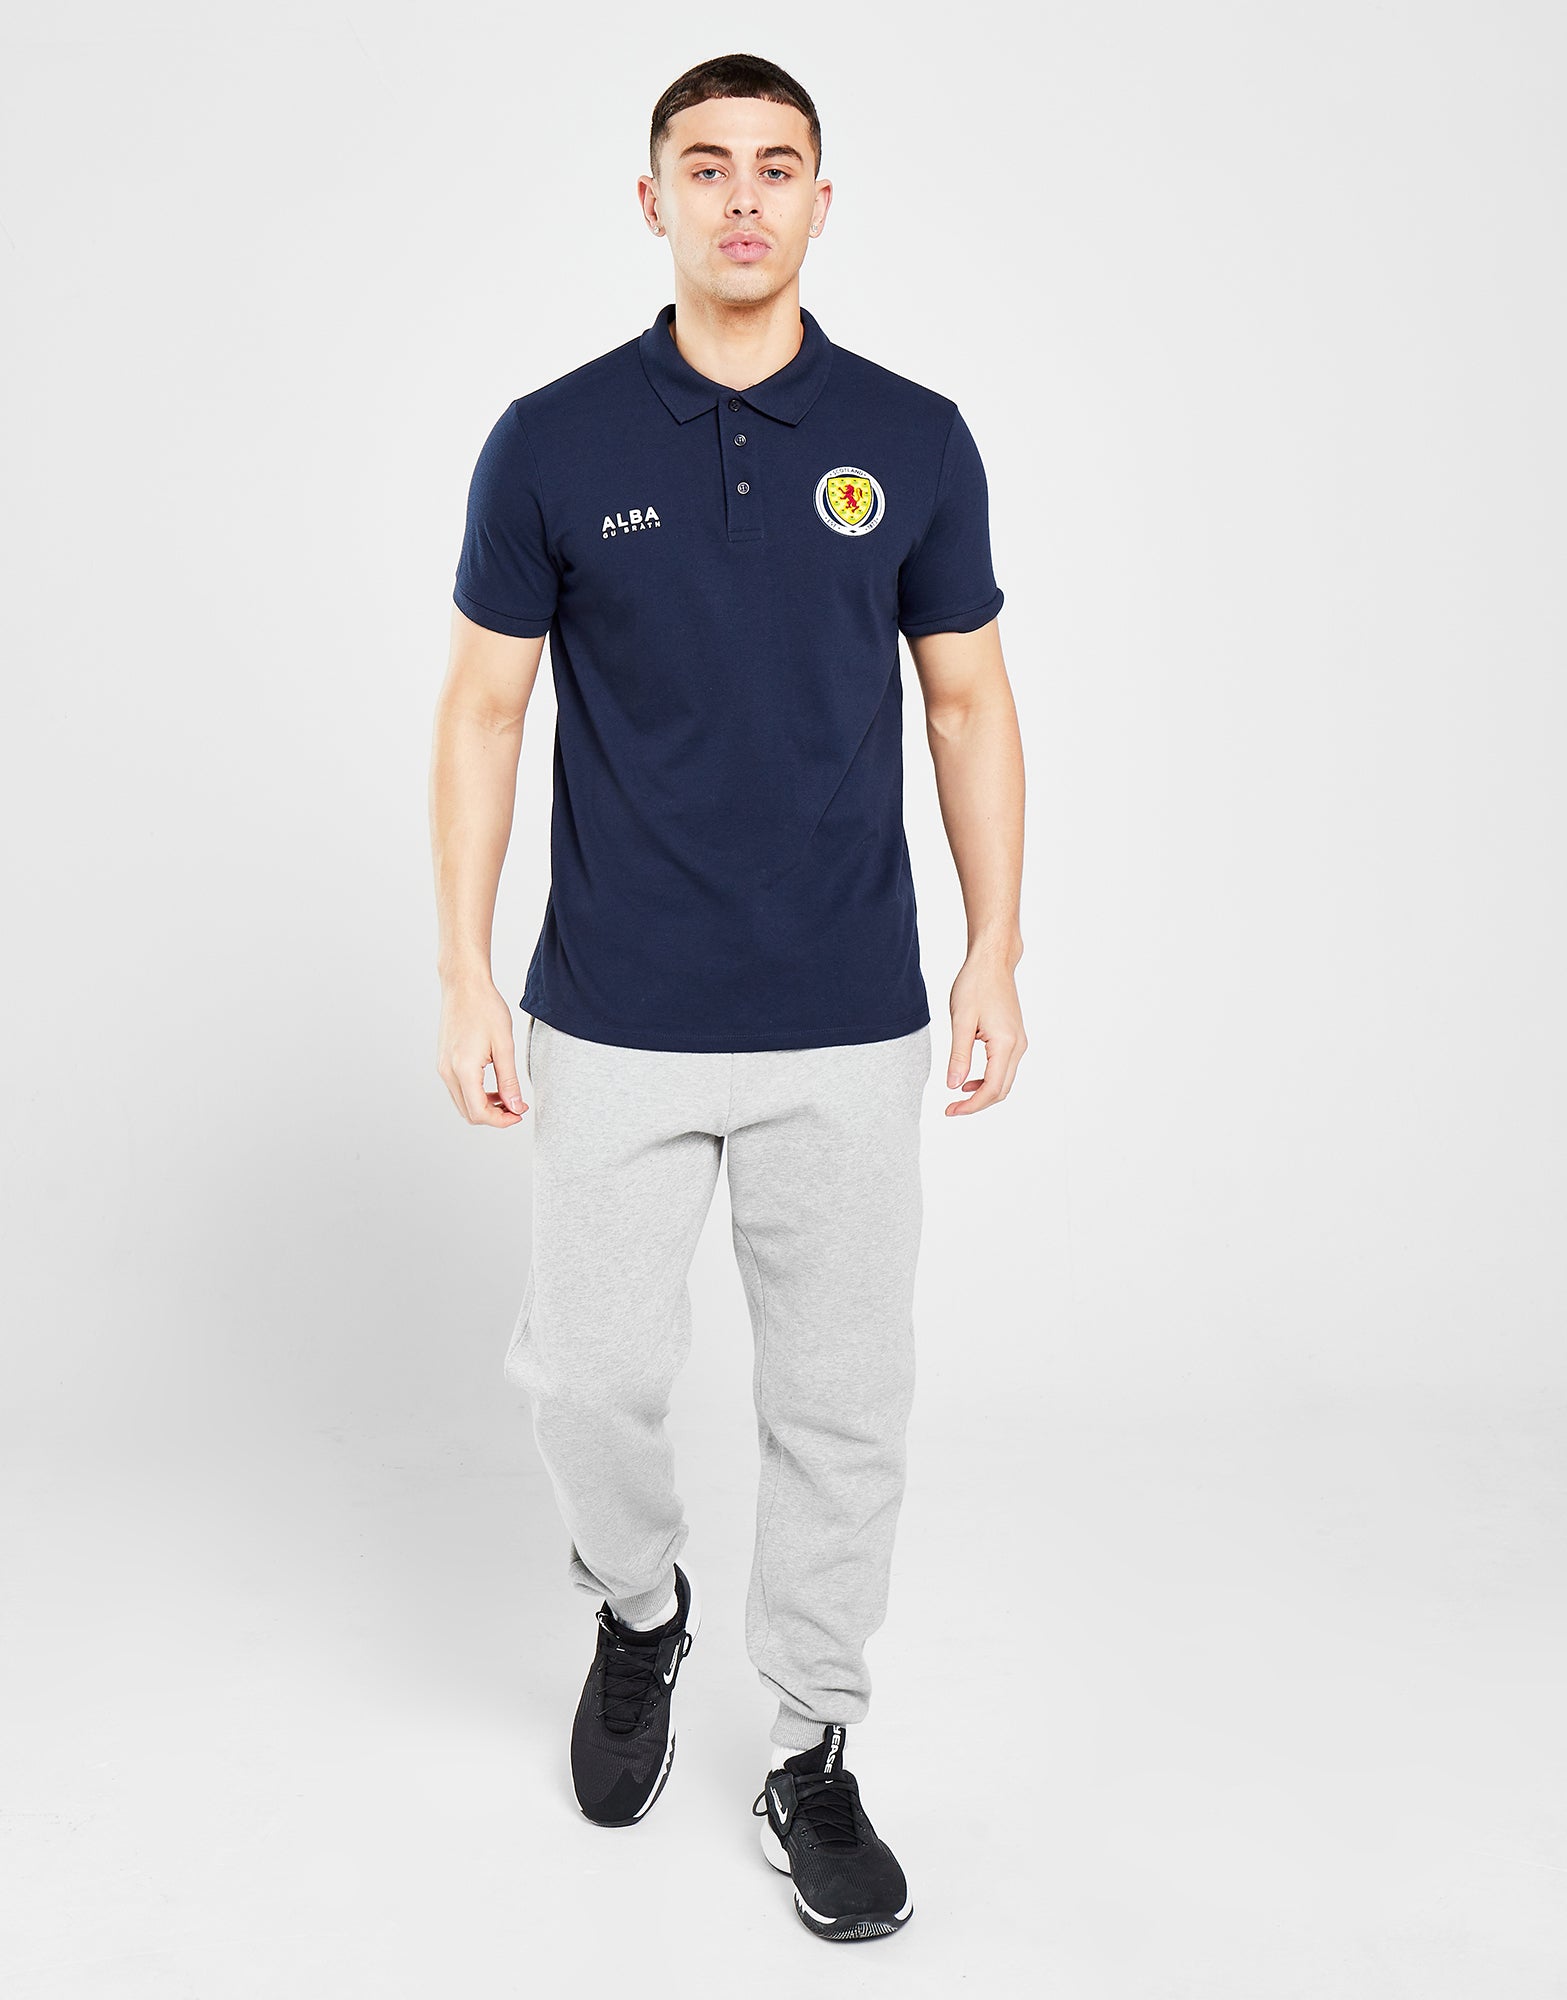 Official Team Scotland Polo - Navy - The World Football Store